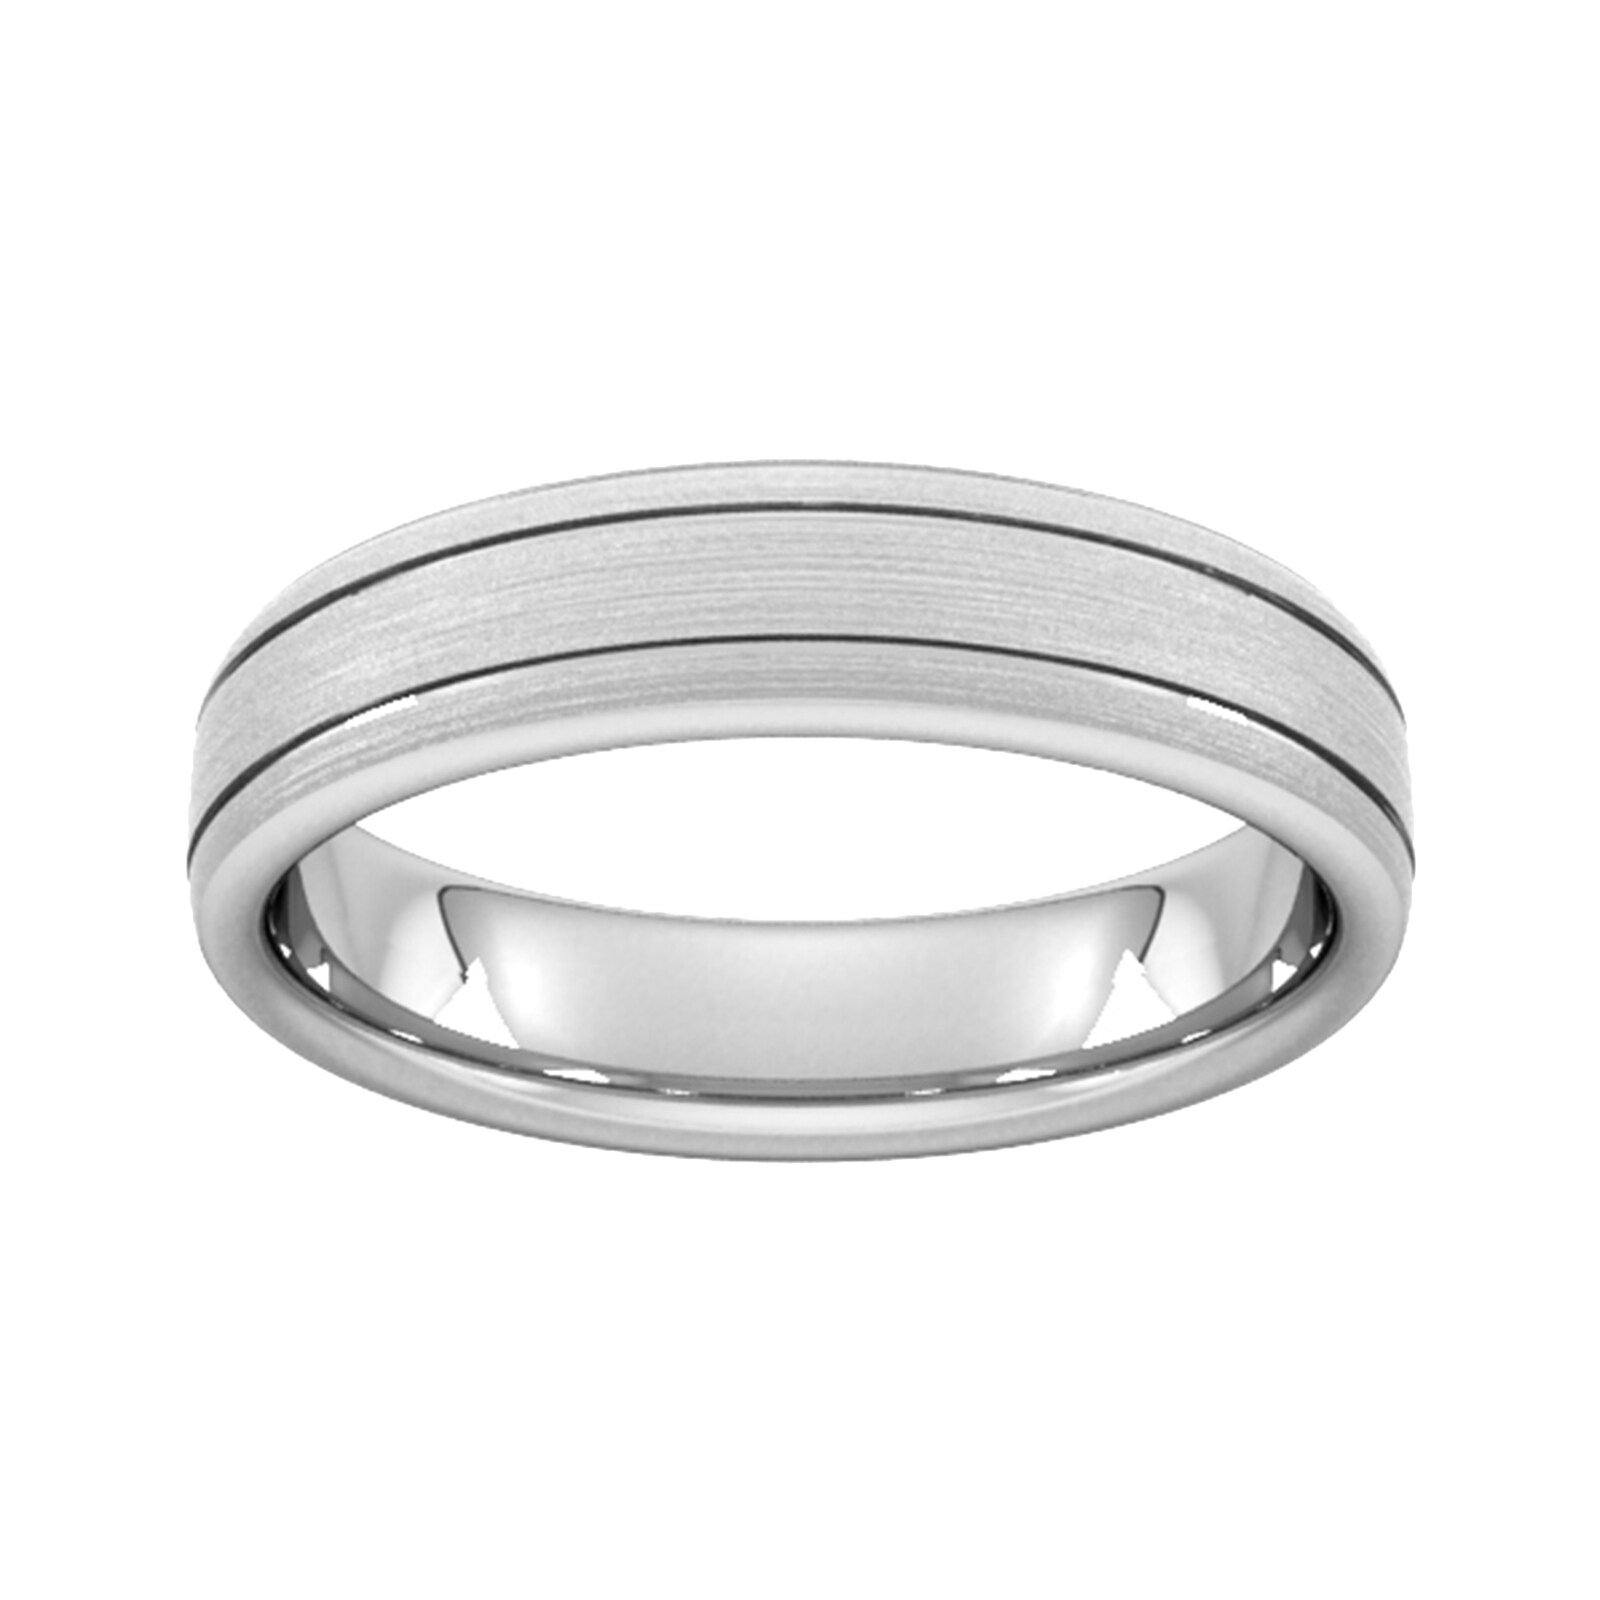 5mm Slight Court Standard Matt Finish With Double Grooves Wedding Ring In 950 Palladium - Ring Size K